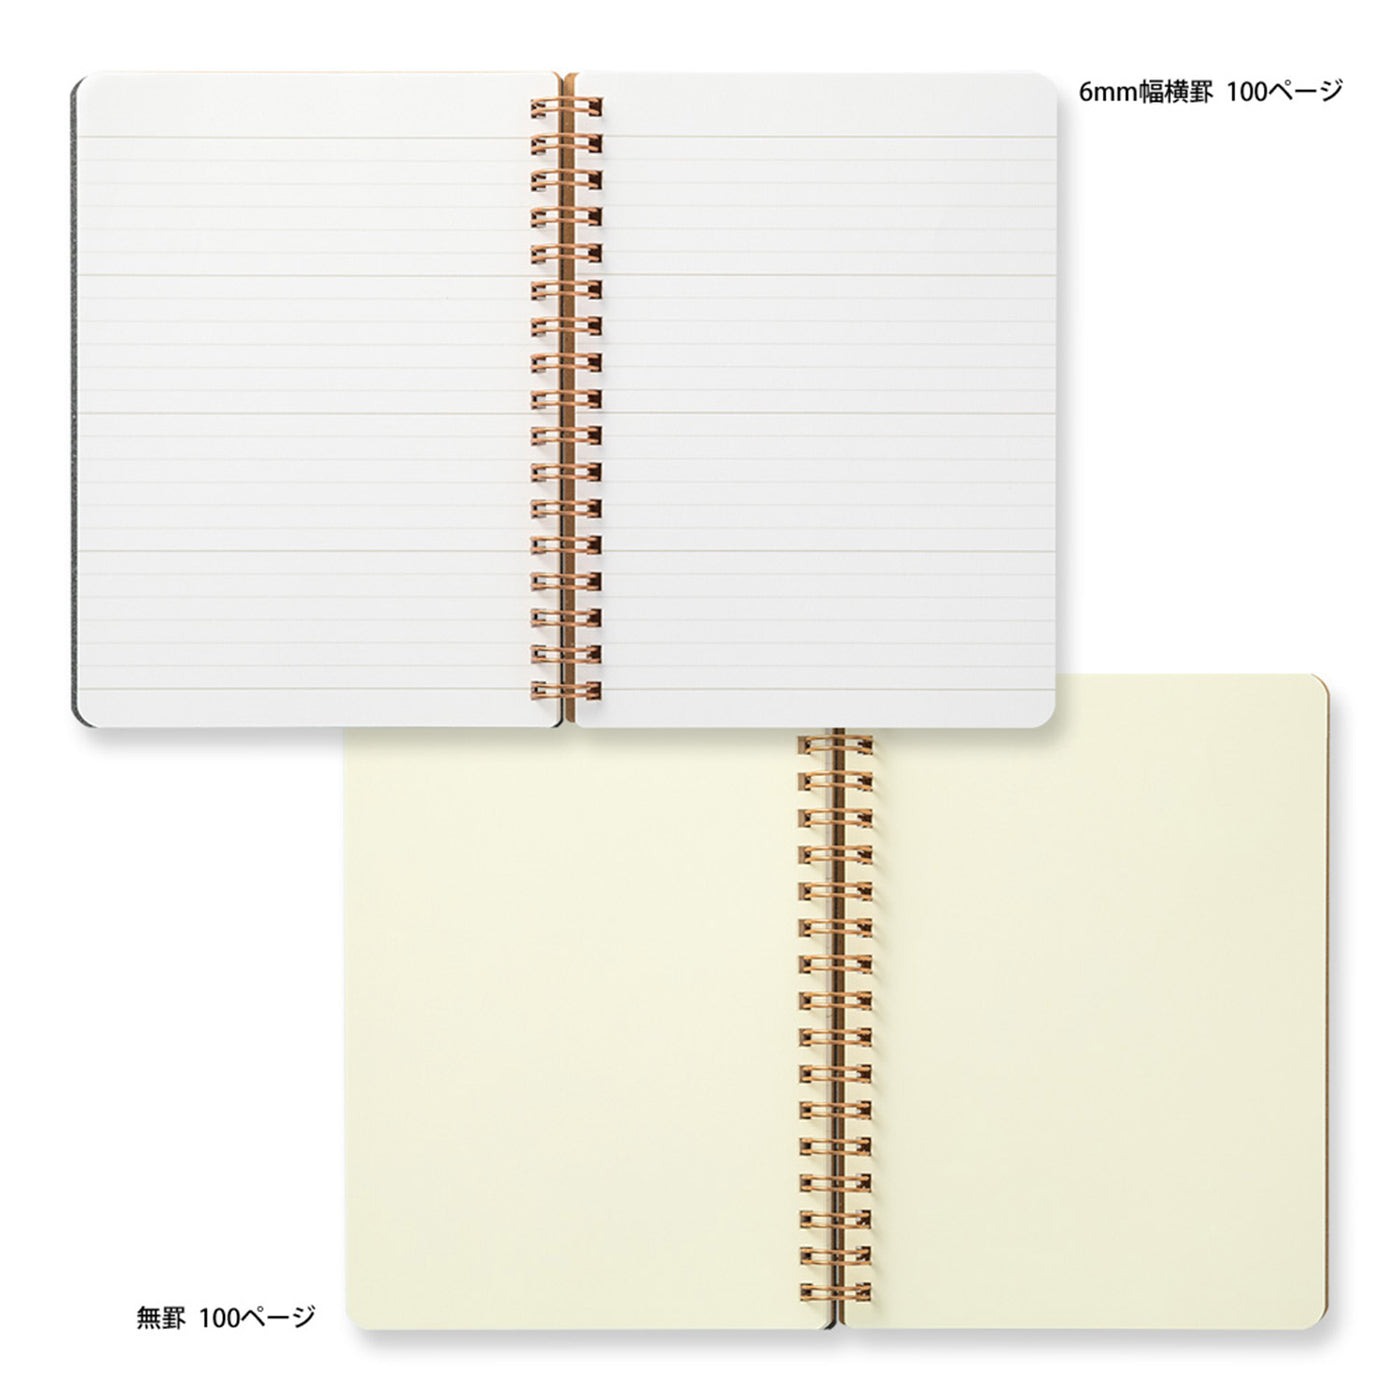 Midori WM Grain Black Wirebound Notebook - B6 Ruled & Plain 3